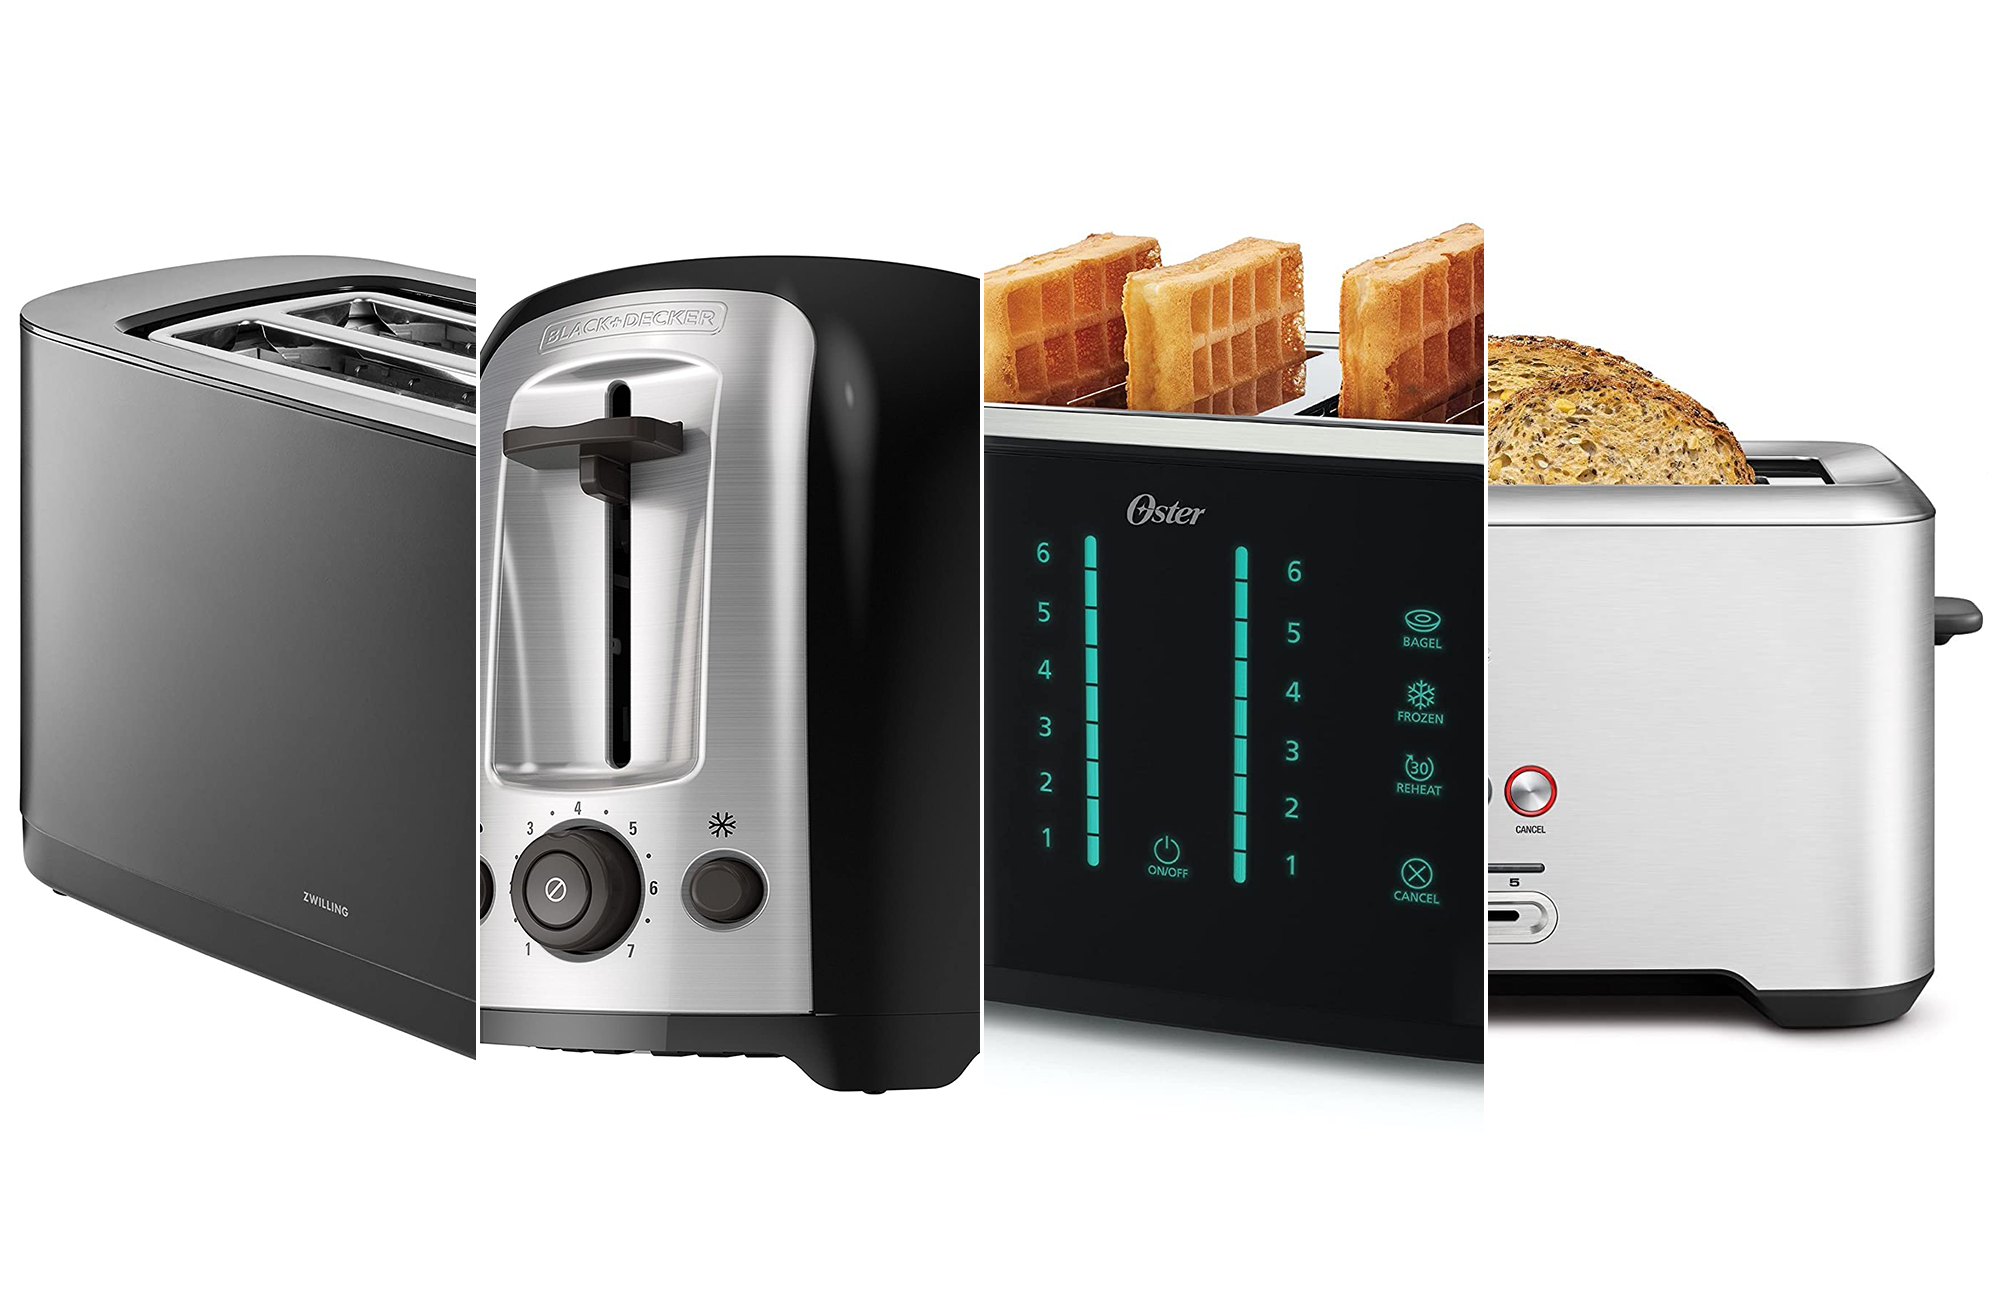 https://www.popsci.com/uploads/2021/02/06/best-toasters.png?auto=webp&width=1440&height=936